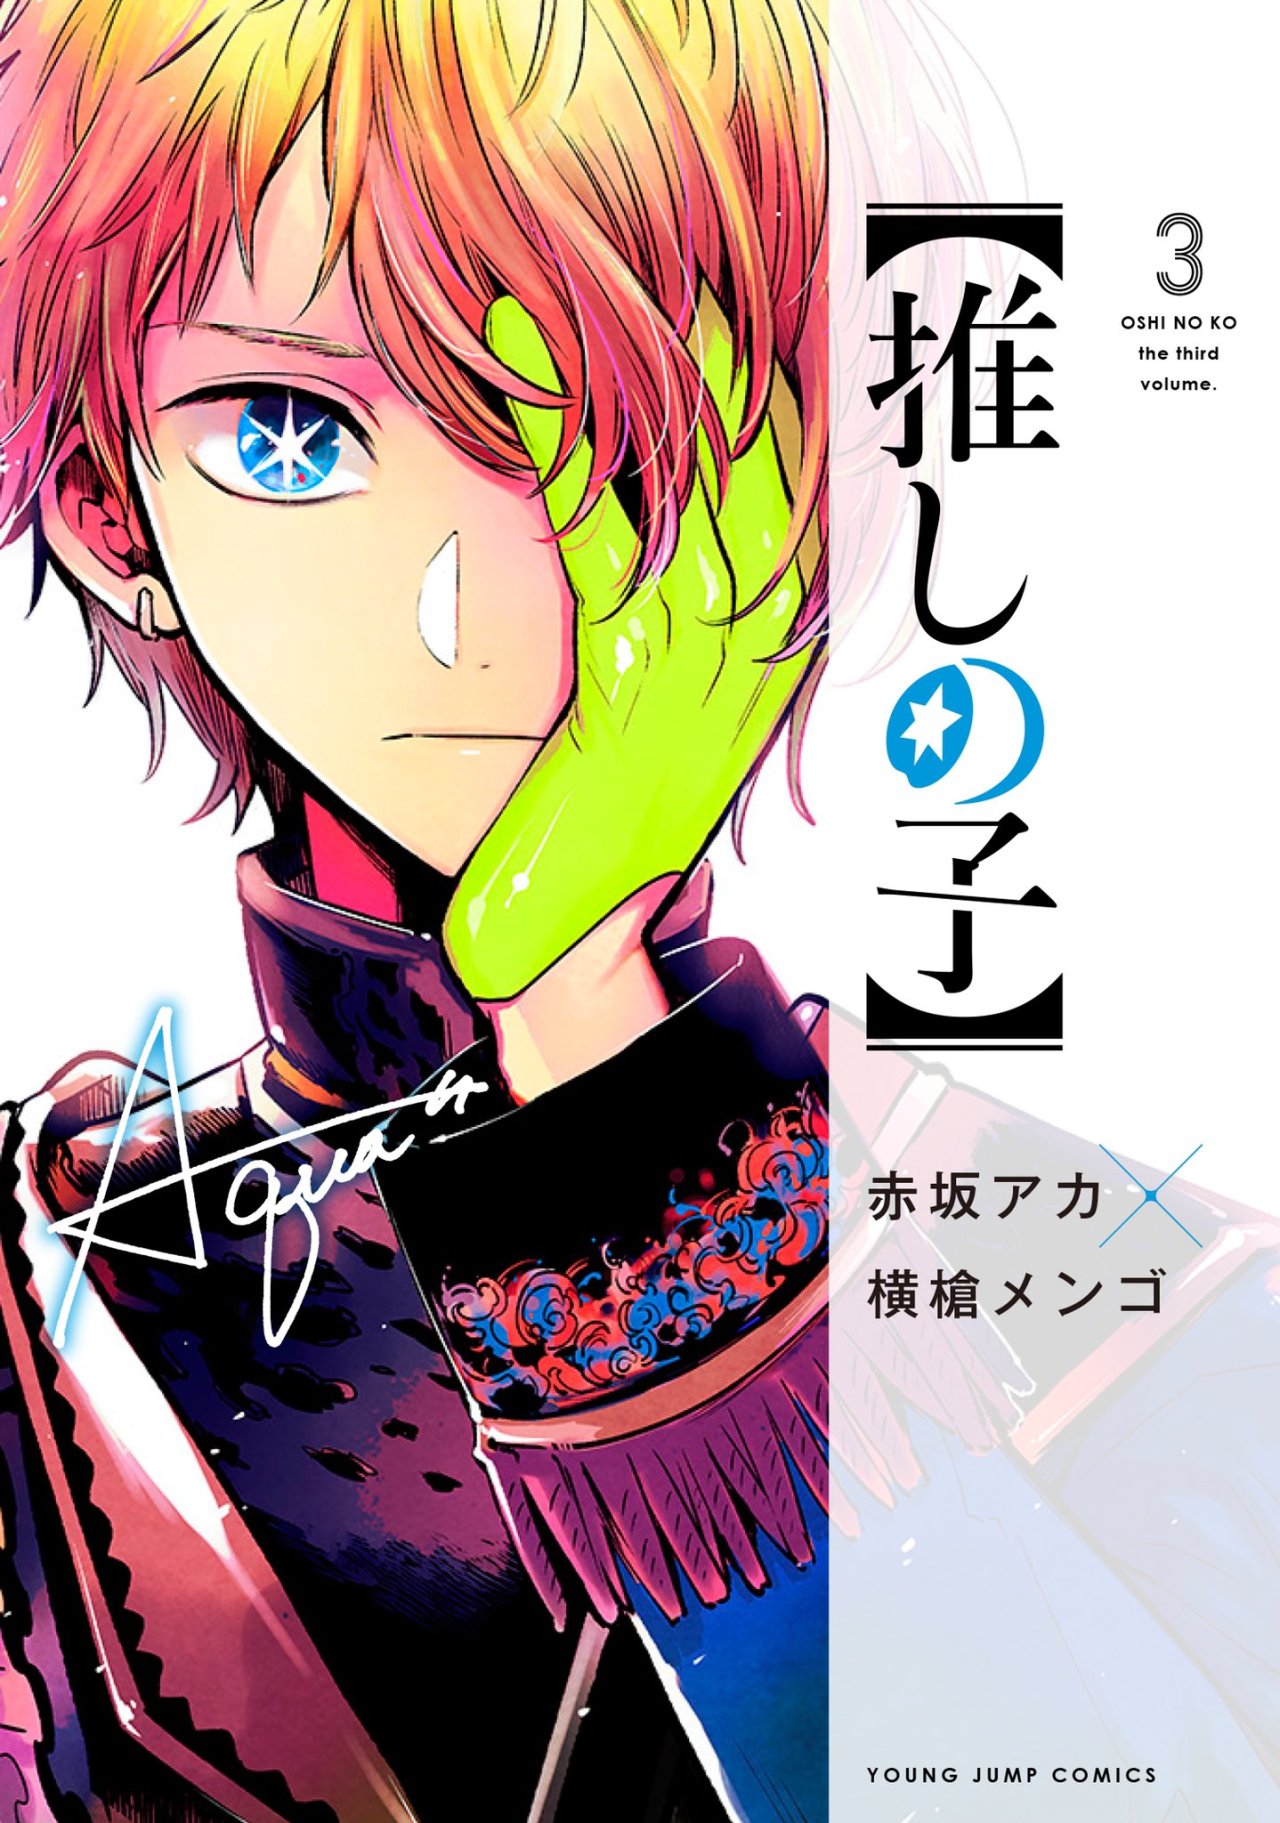 OSHI NO KO Vol 1-5 Japanese Language Comic Book Set Manga Hoshino Aquamarine 